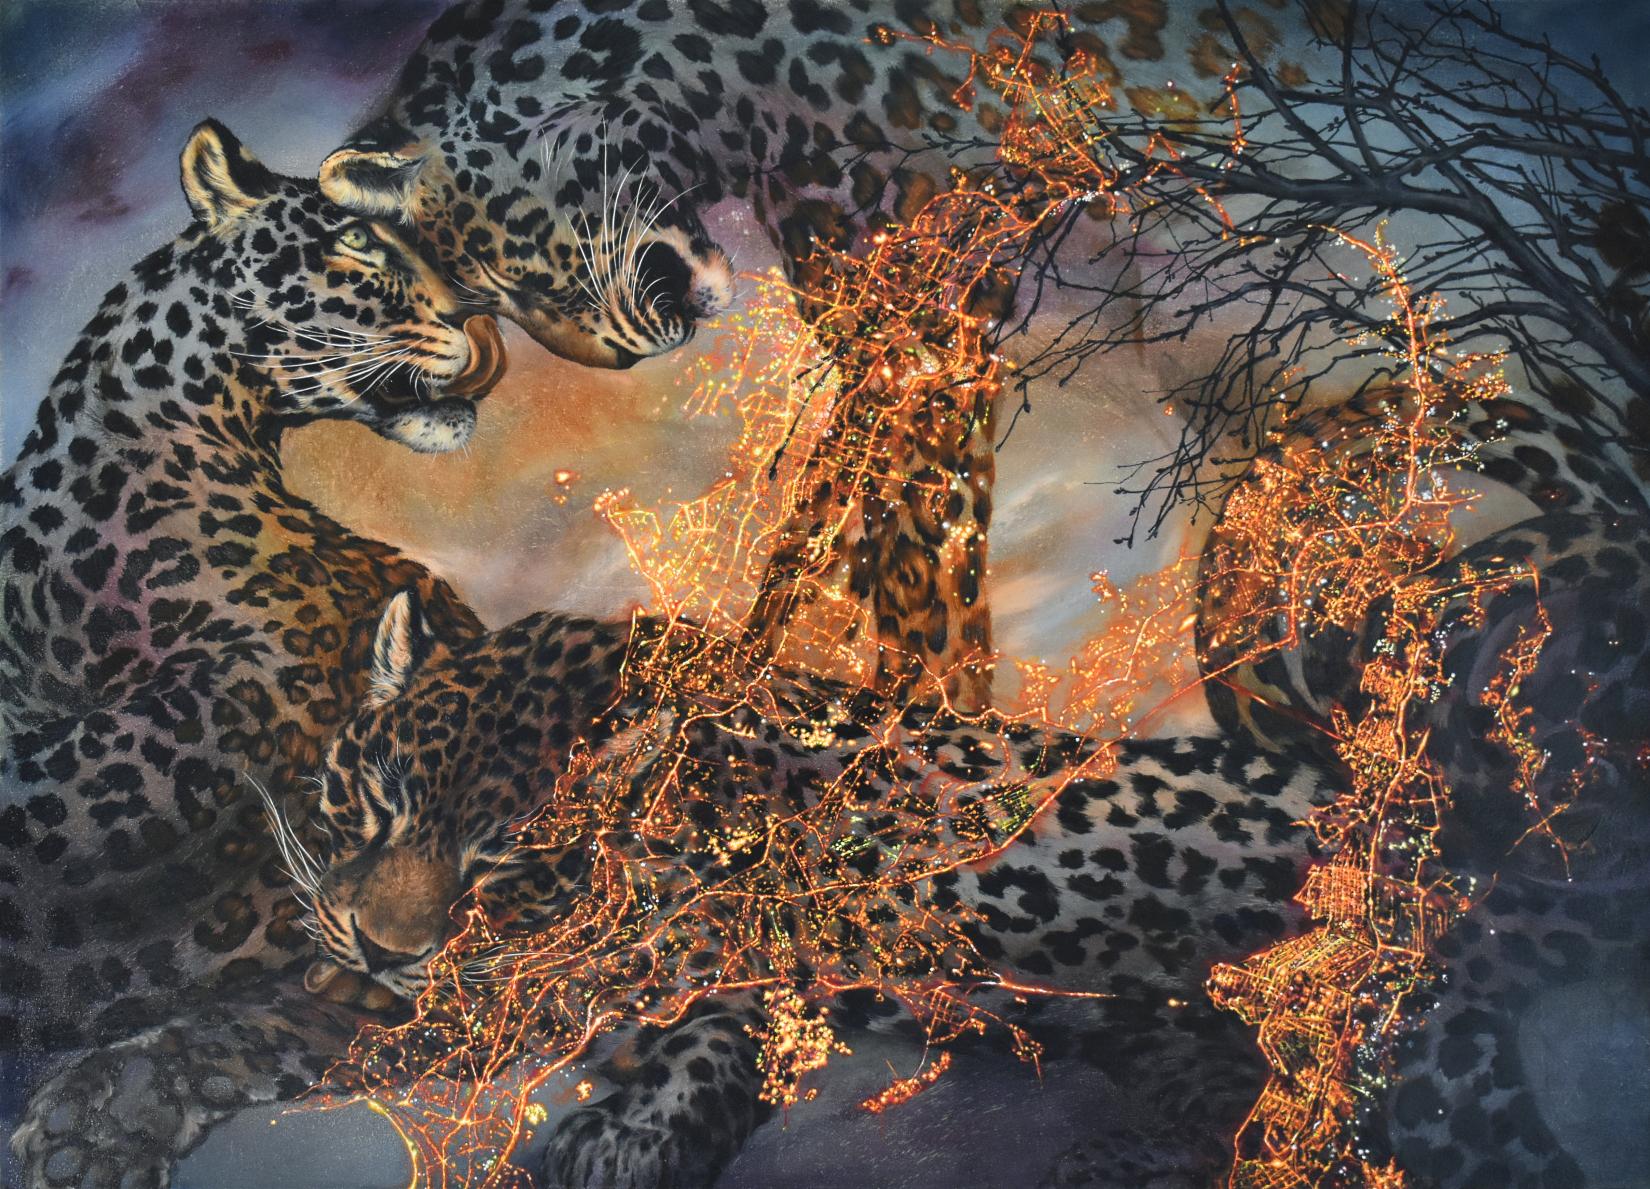 Francine Fox Animal Painting – Leoparden von Mumbai, Leopard, Tier, Bäume, Grau, Gold Natur inspirierte Malerei